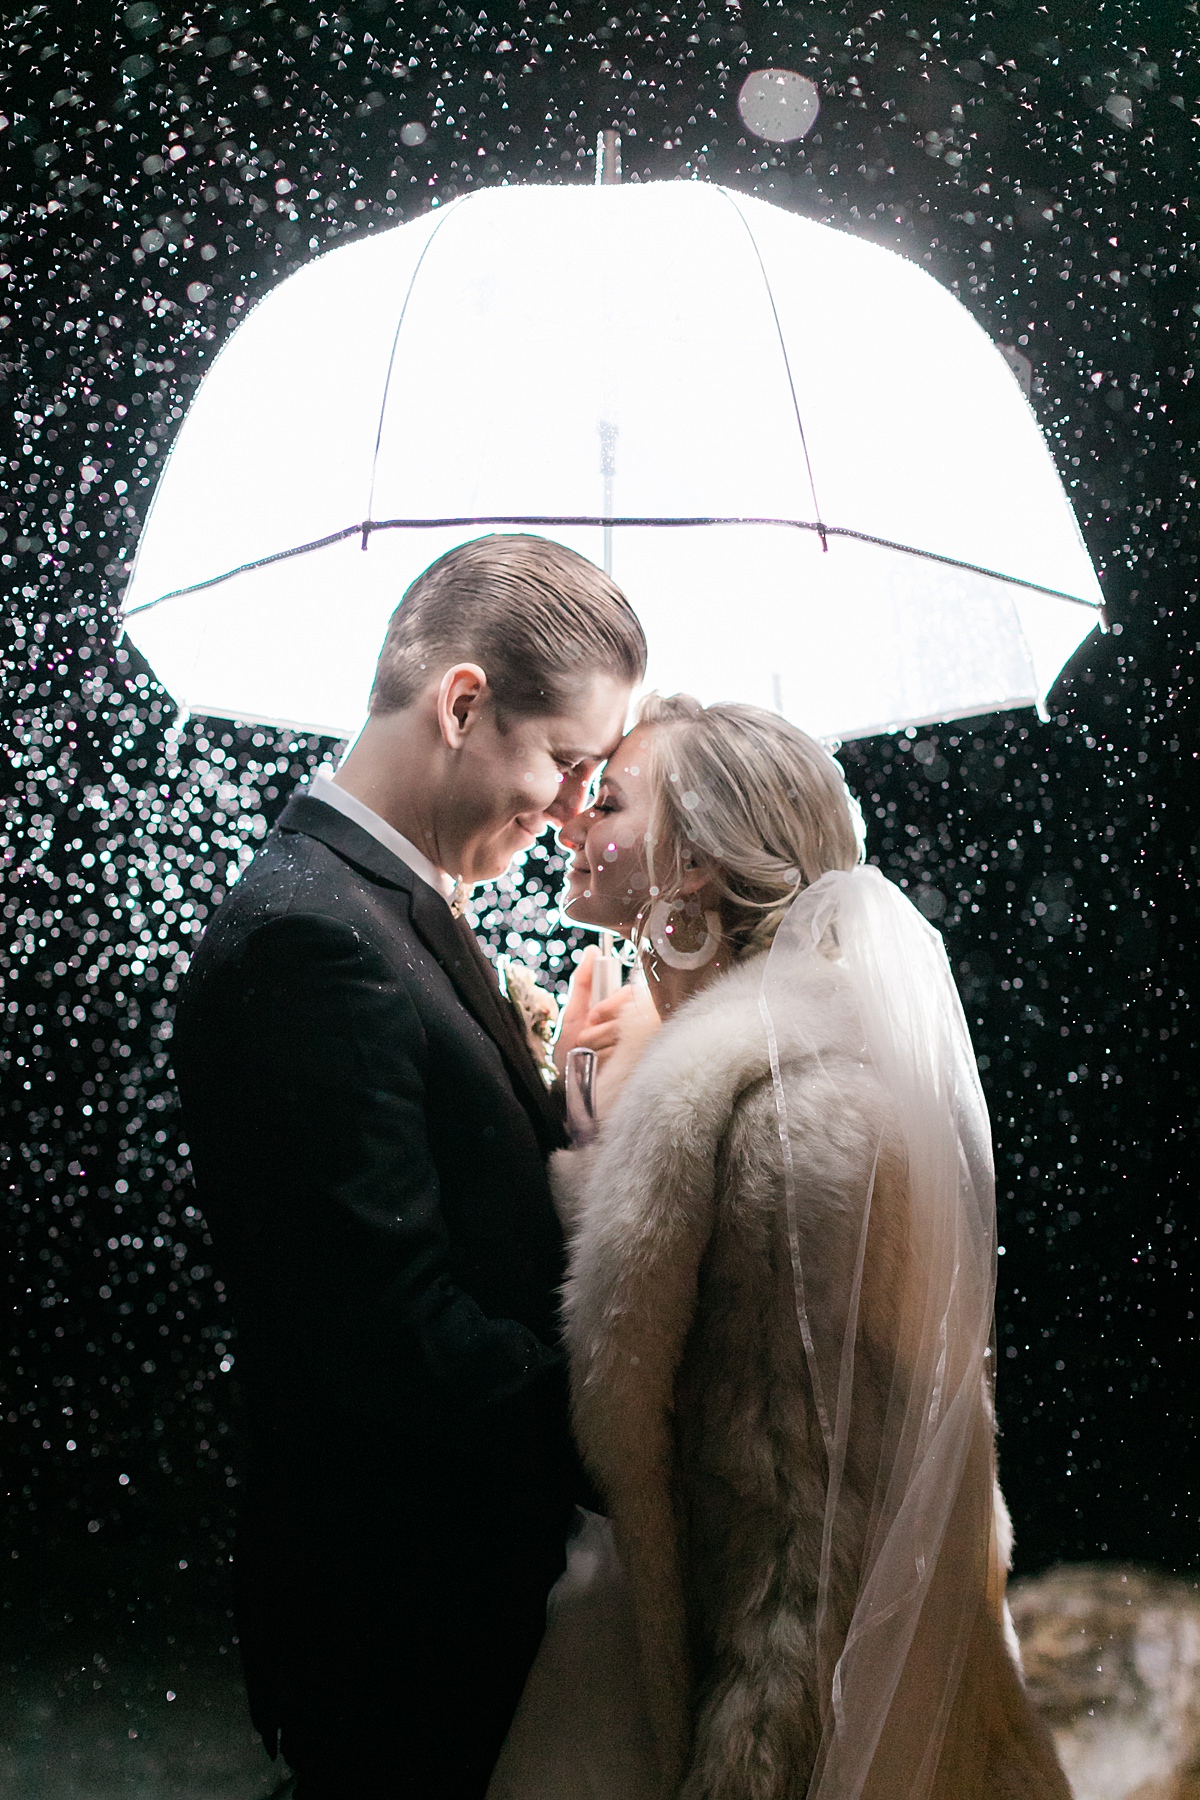 Magical Rain photo at Oyster Ridge Winery wedding by Tayler Enerle